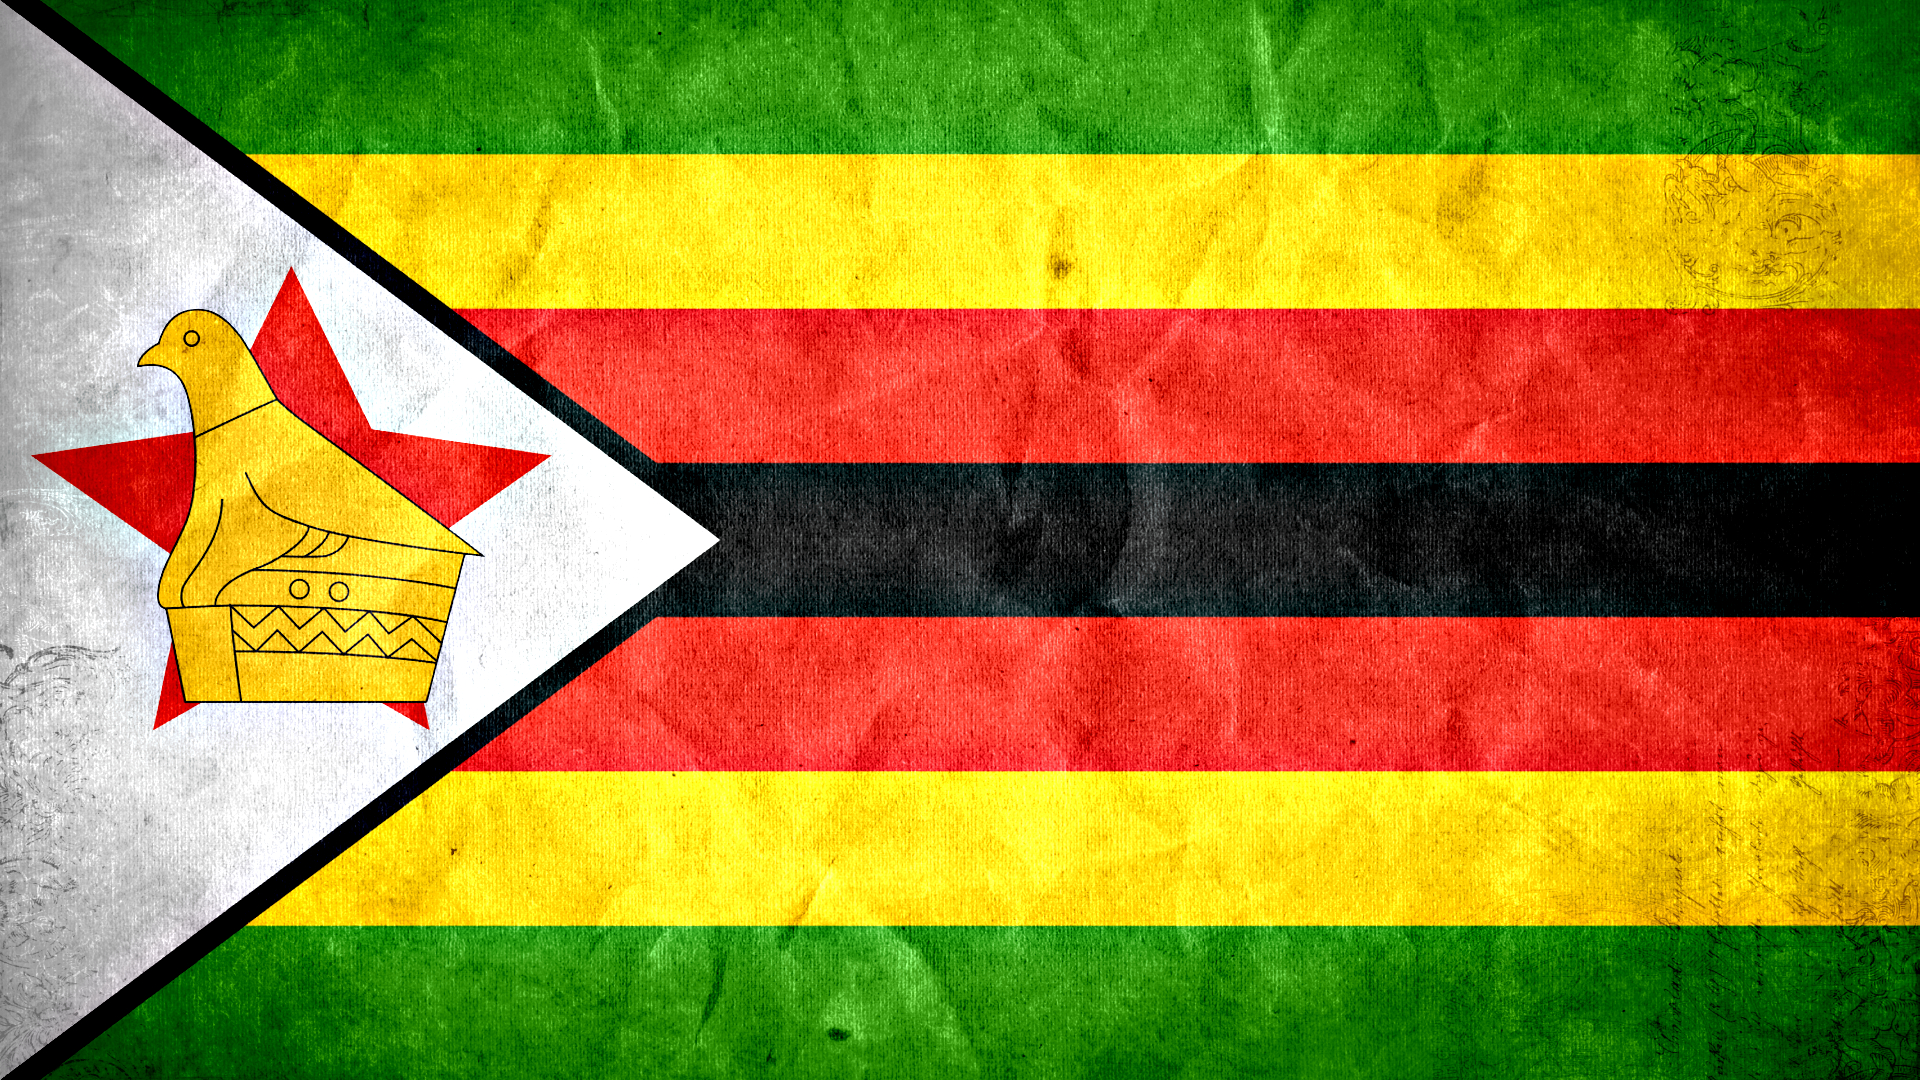 Zimbabwe Calls On EU To Lift Sanctions